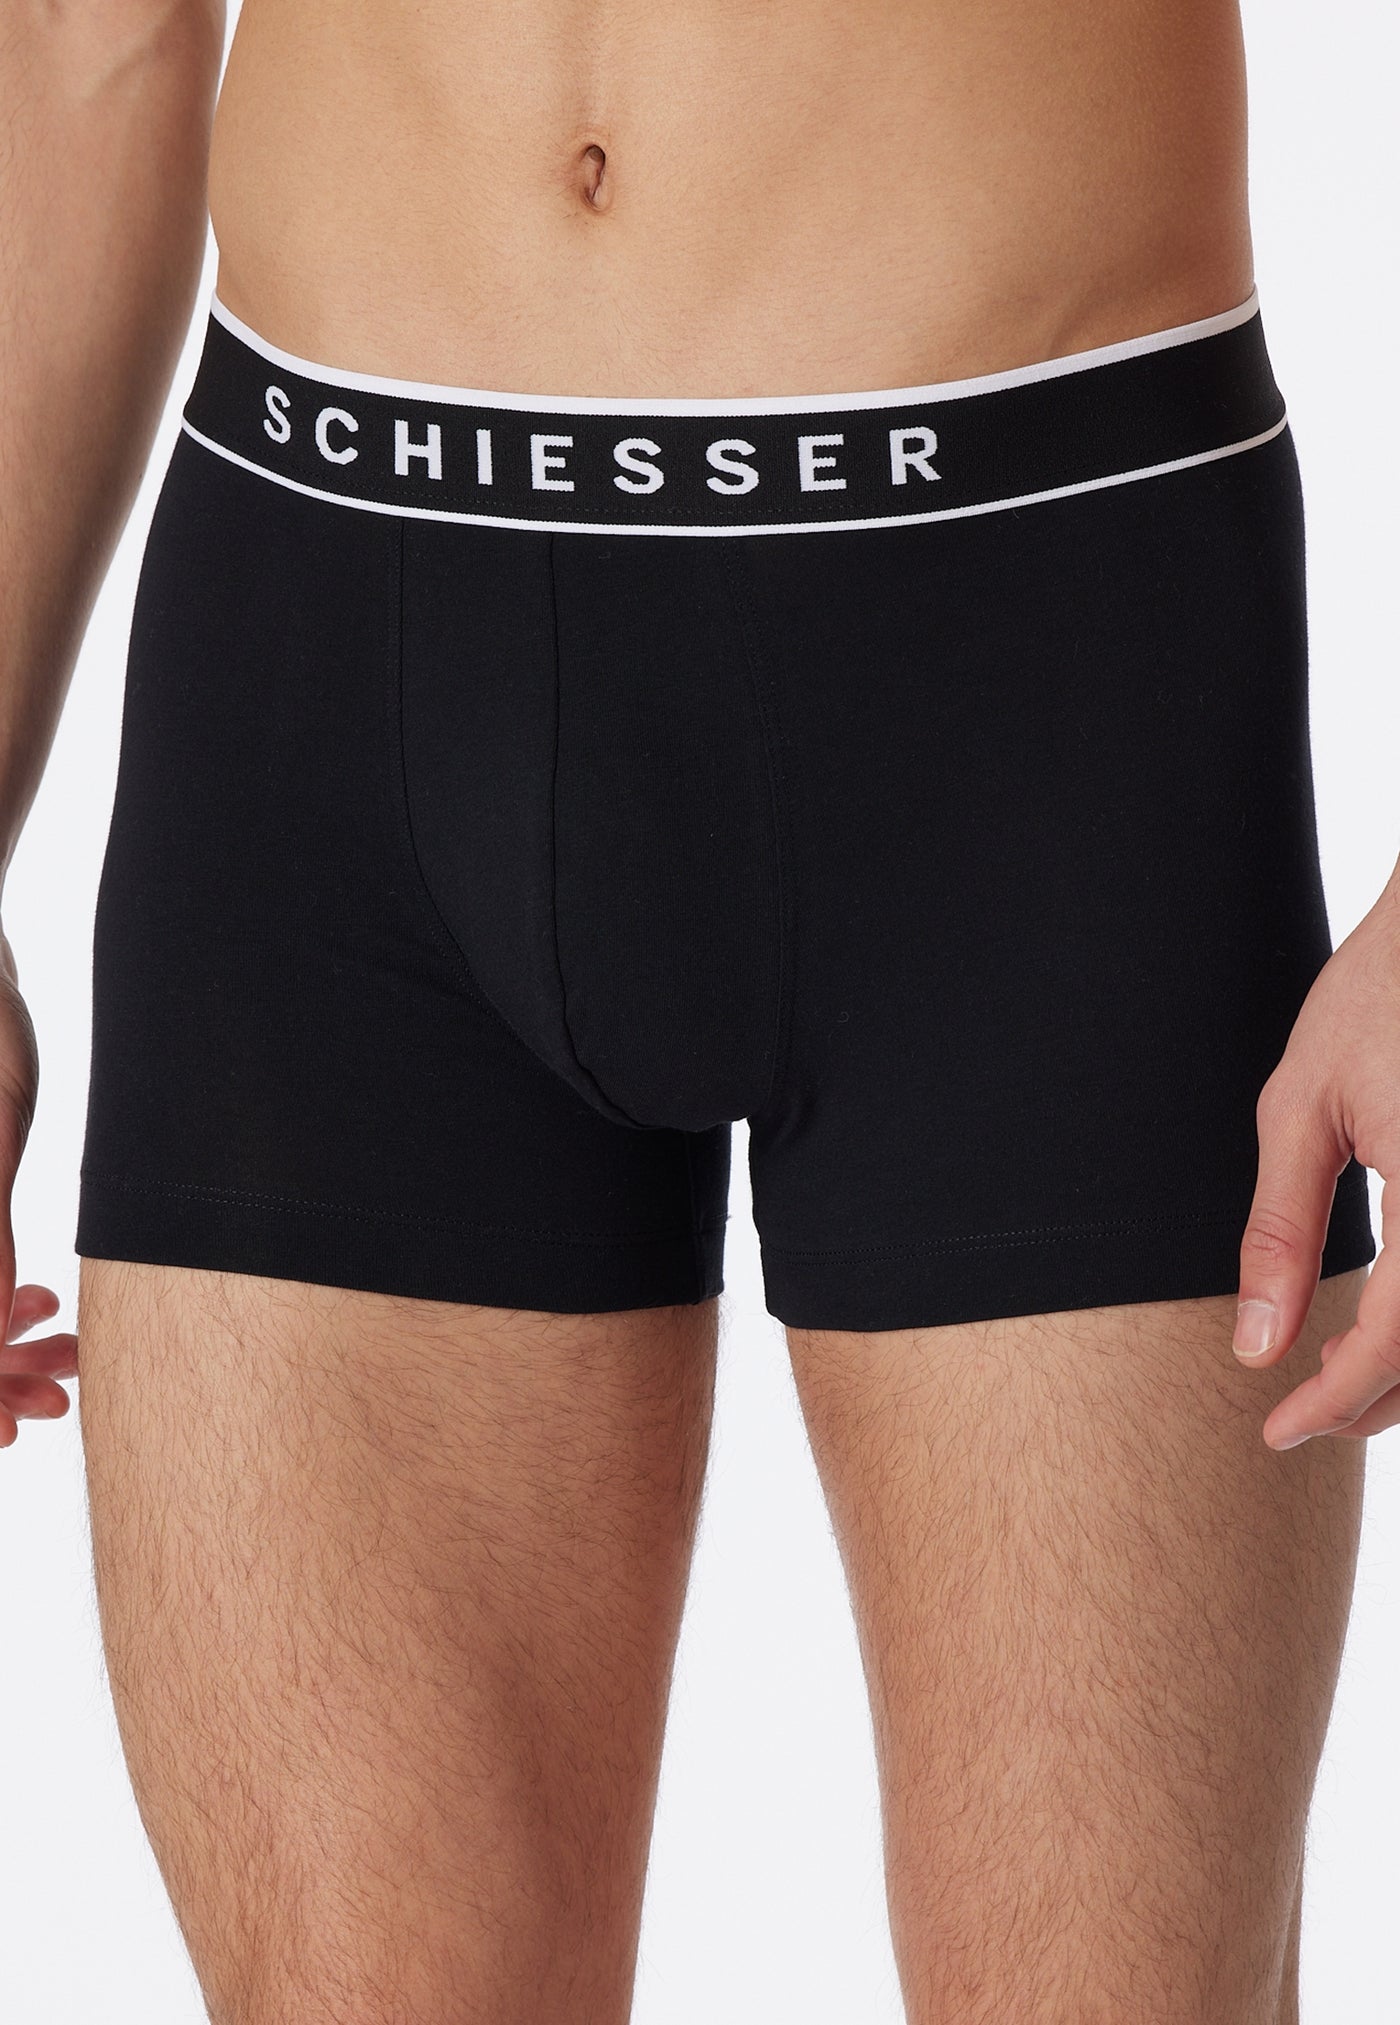 Schiesser - Organic Cotton - Shorts  3 Pack - SALE